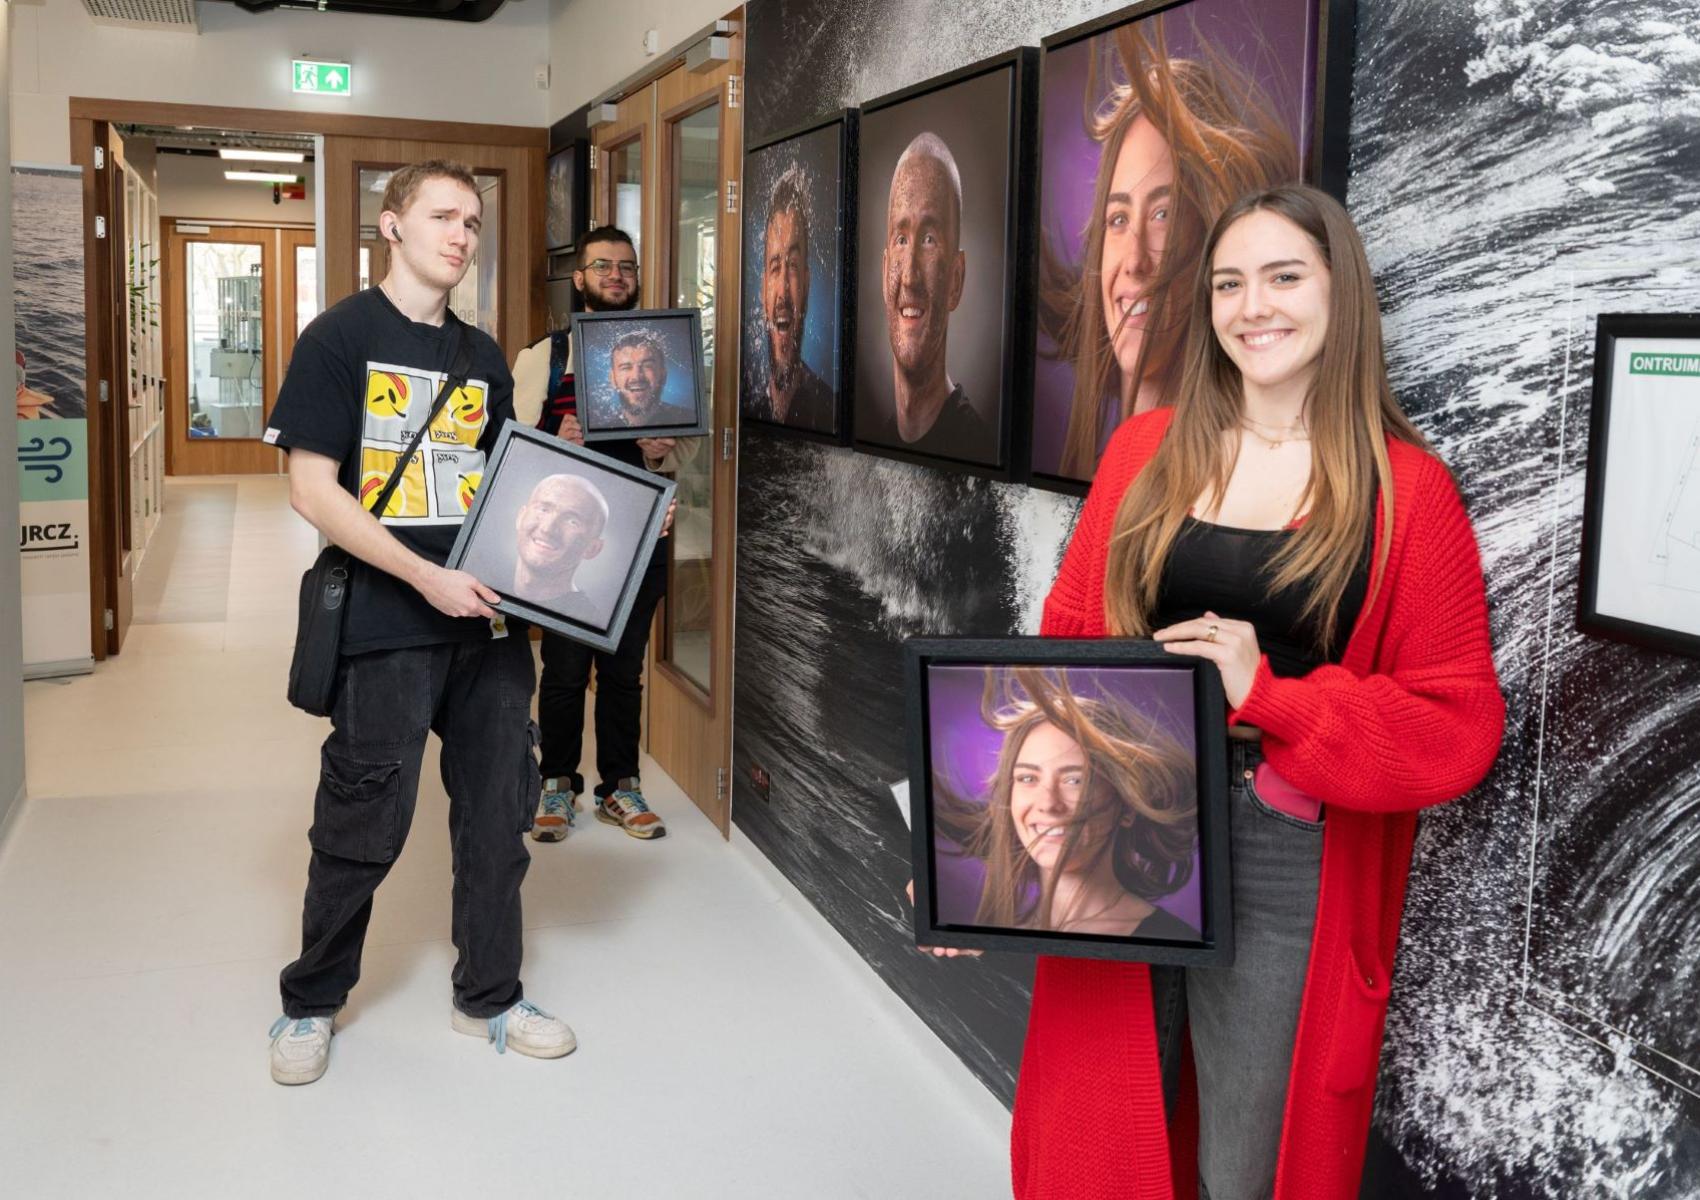 Students portrayed for artwork JRCZ